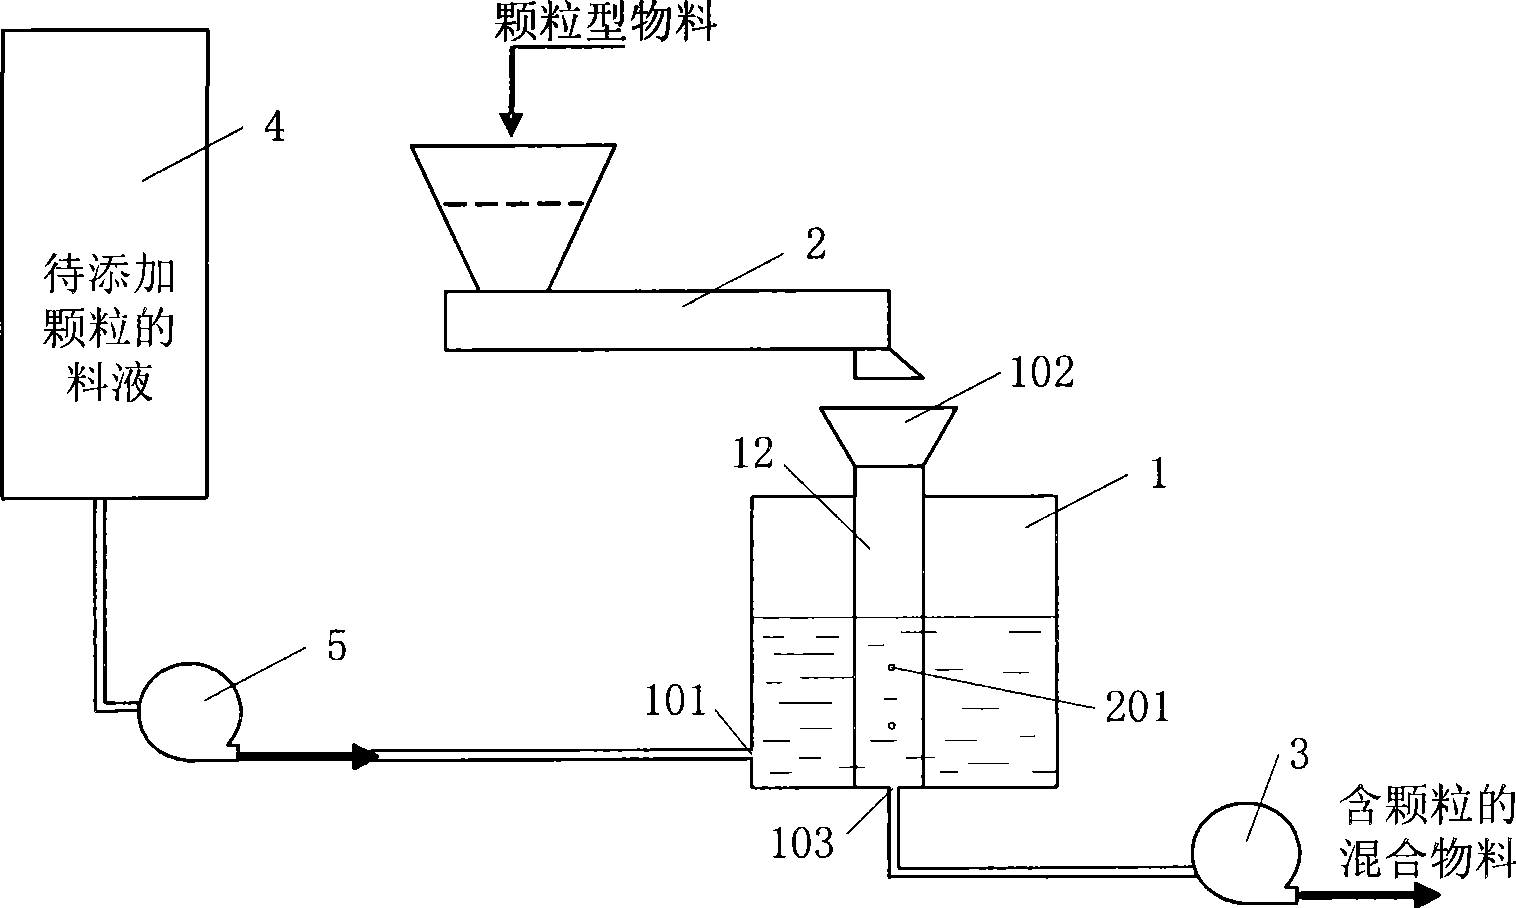 Method for producing granule-containing liquid drink